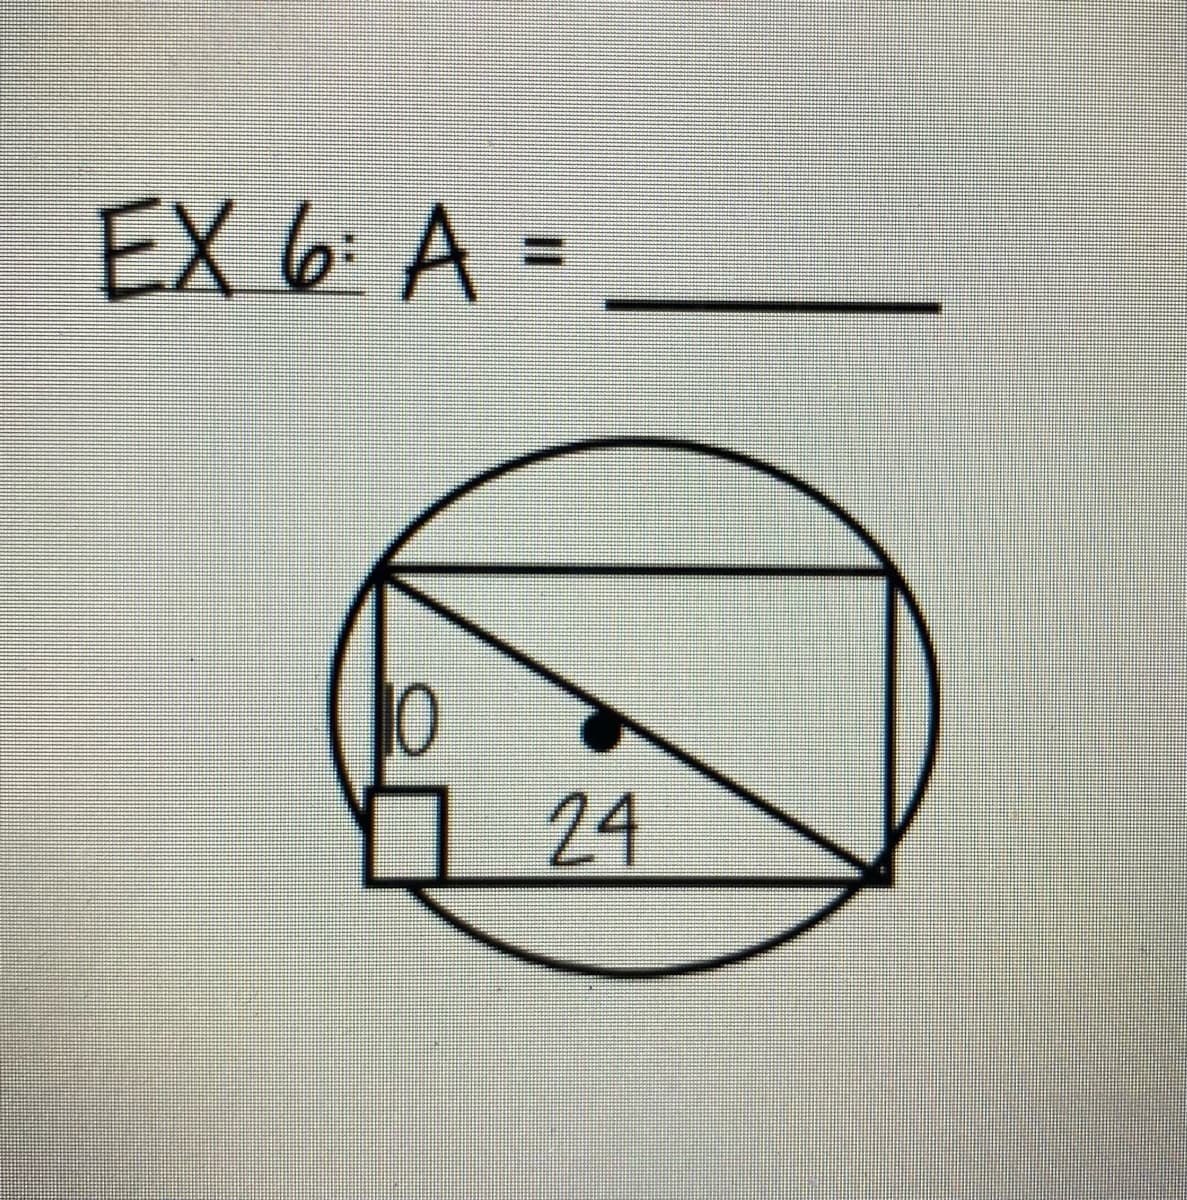 EX 6: A =
10
24
